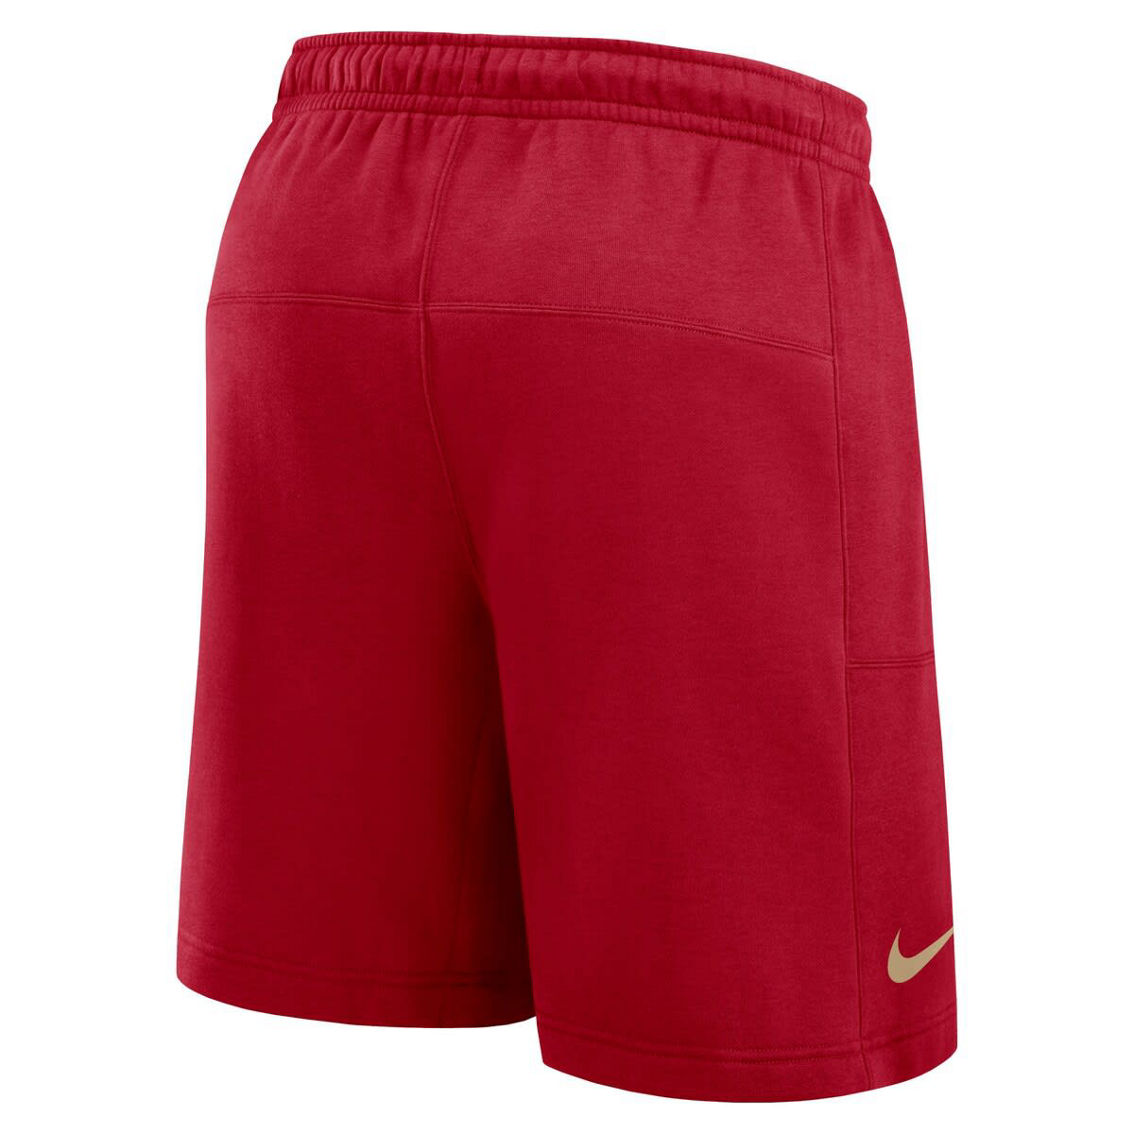 Nike Men's Scarlet San Francisco 49ers Arched Kicker Shorts - Image 4 of 4